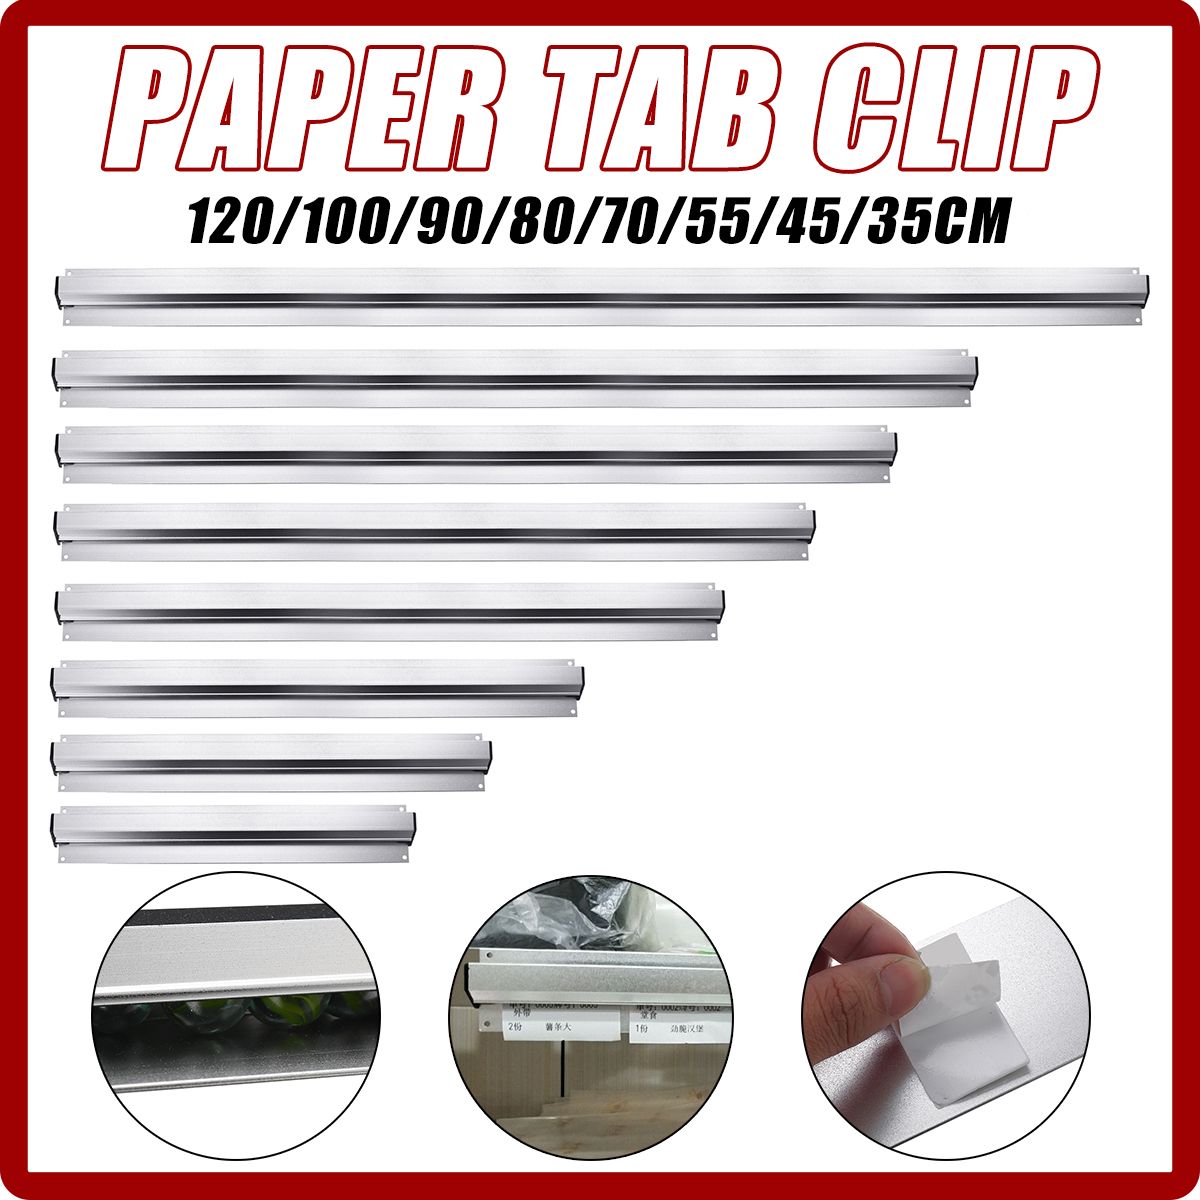 Paper-Receipt-Check-Bill-Order-Tab-Clip-Rail-Kitchen-Bar-Cafe-Holder-Rack-Stationery-Clip-1611651